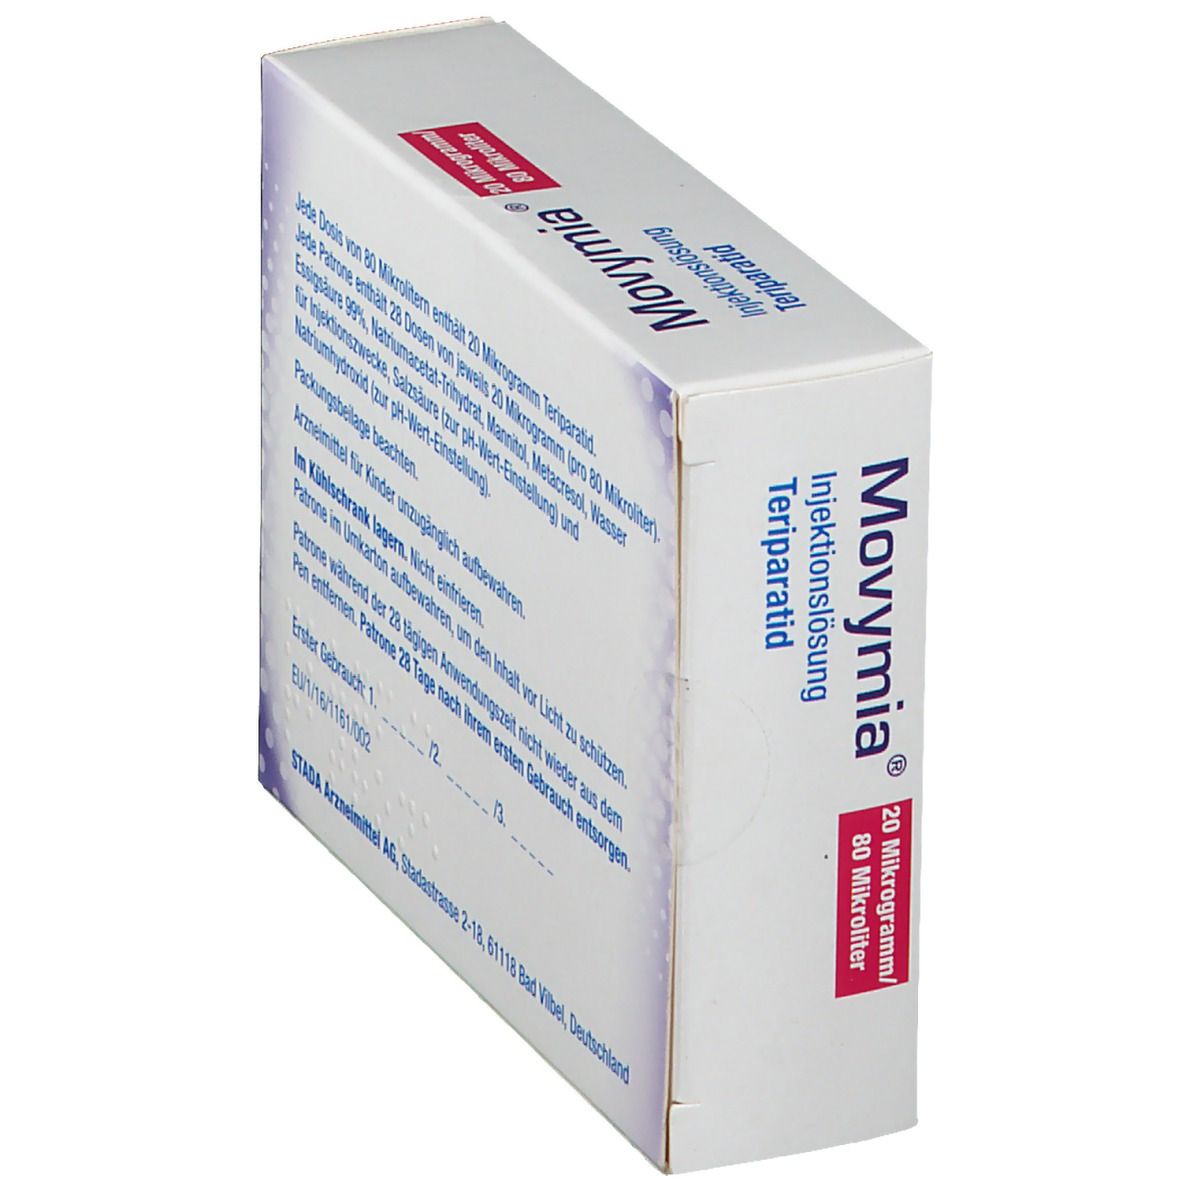 Movymia® 20 µg/80 µl Injektionslösung